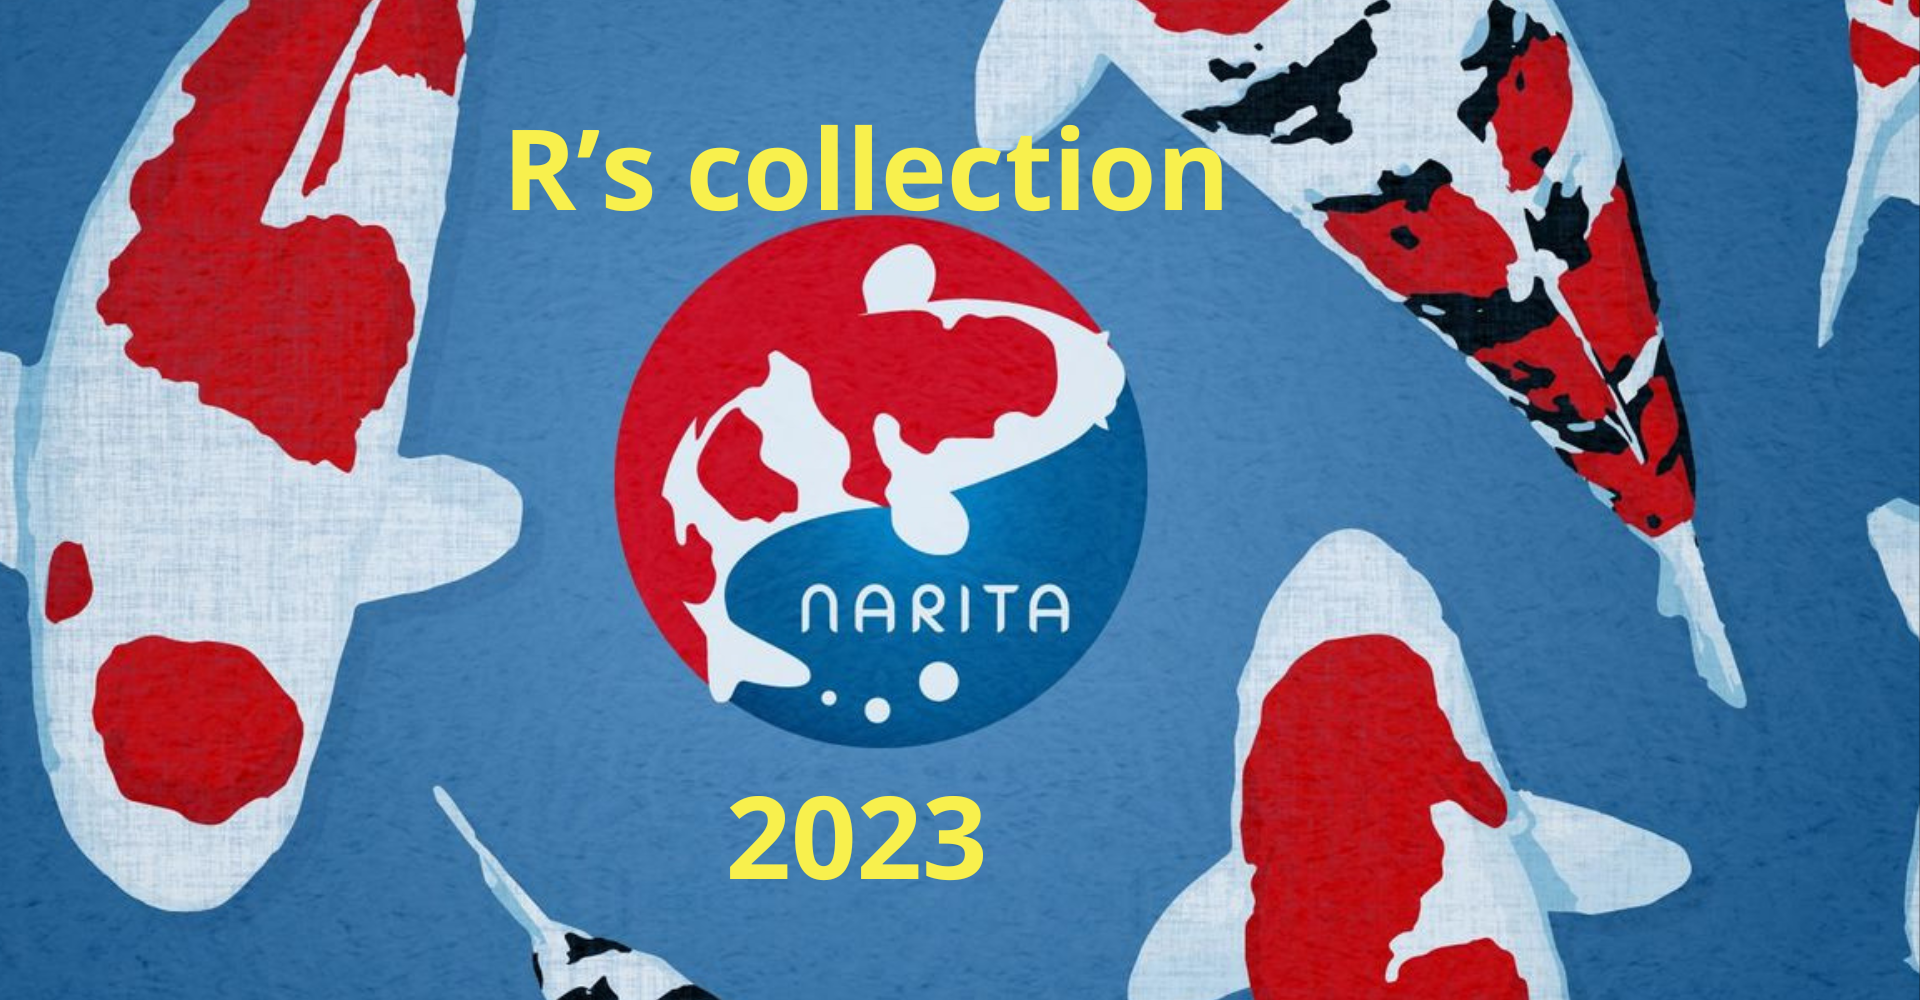 Narita R's collection 2023